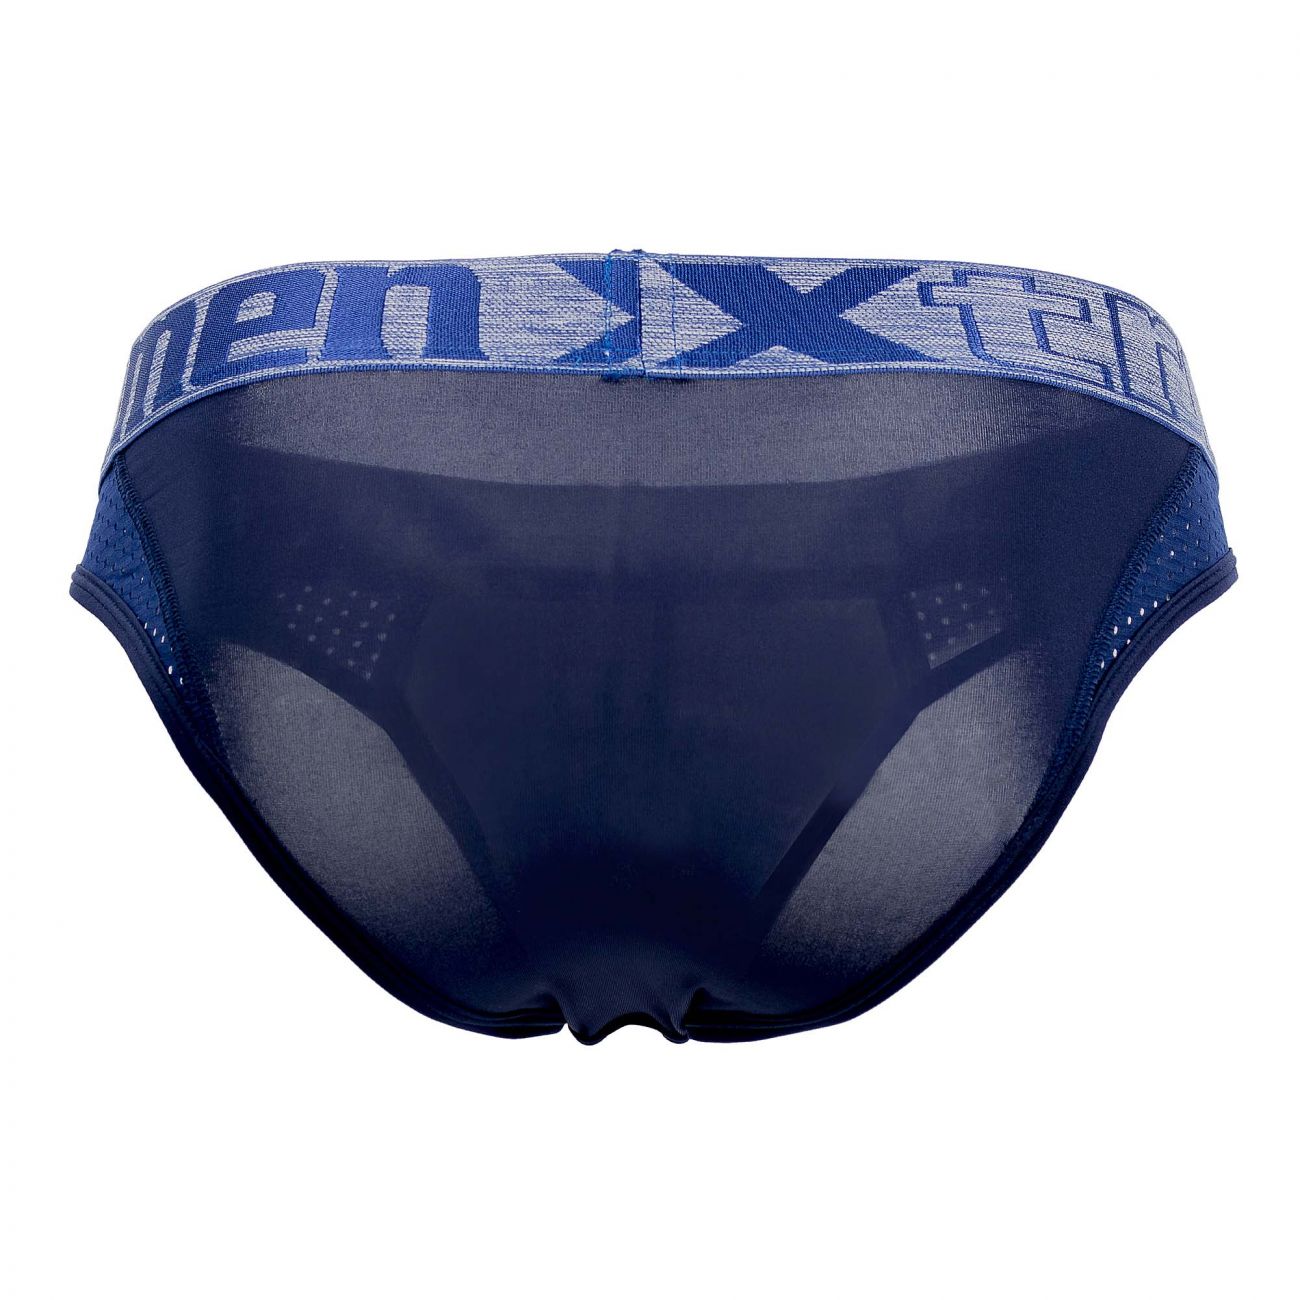 Xtremen 91079 Microfiber Bikini Dark Blue